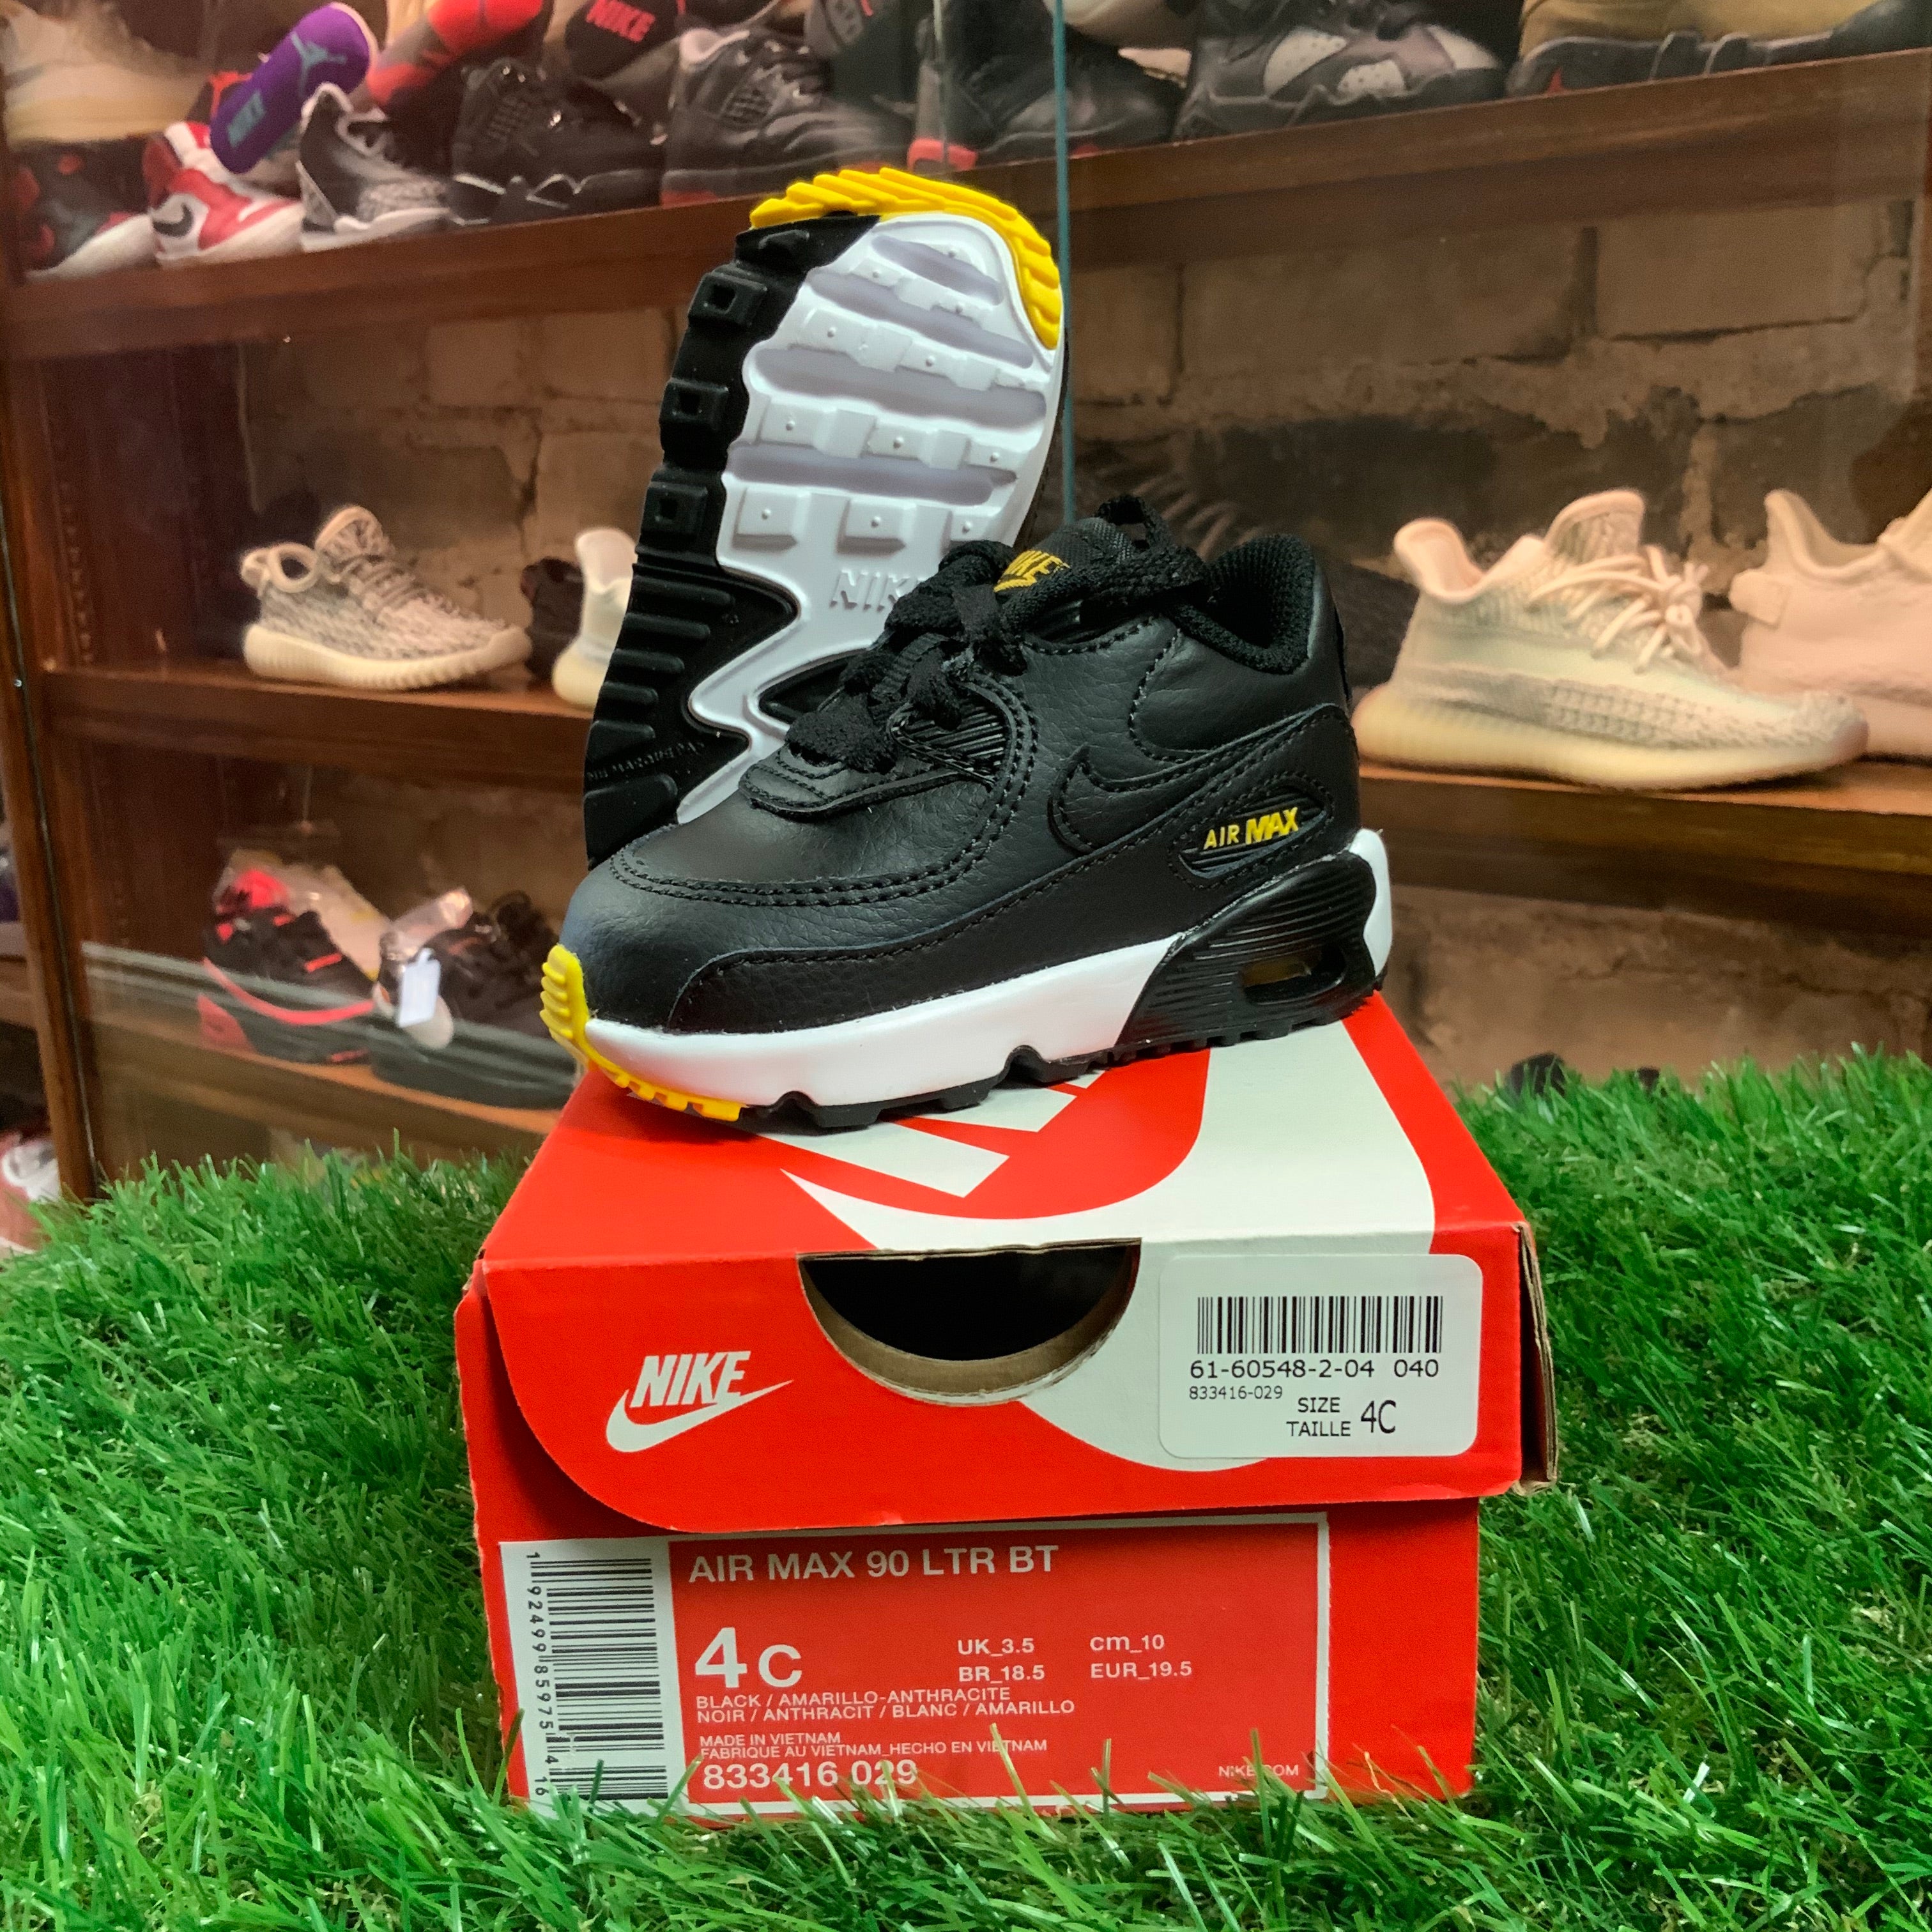 Nike Air Max 90 LTR BT "Black/Amarillo" 2019 (Toddler)